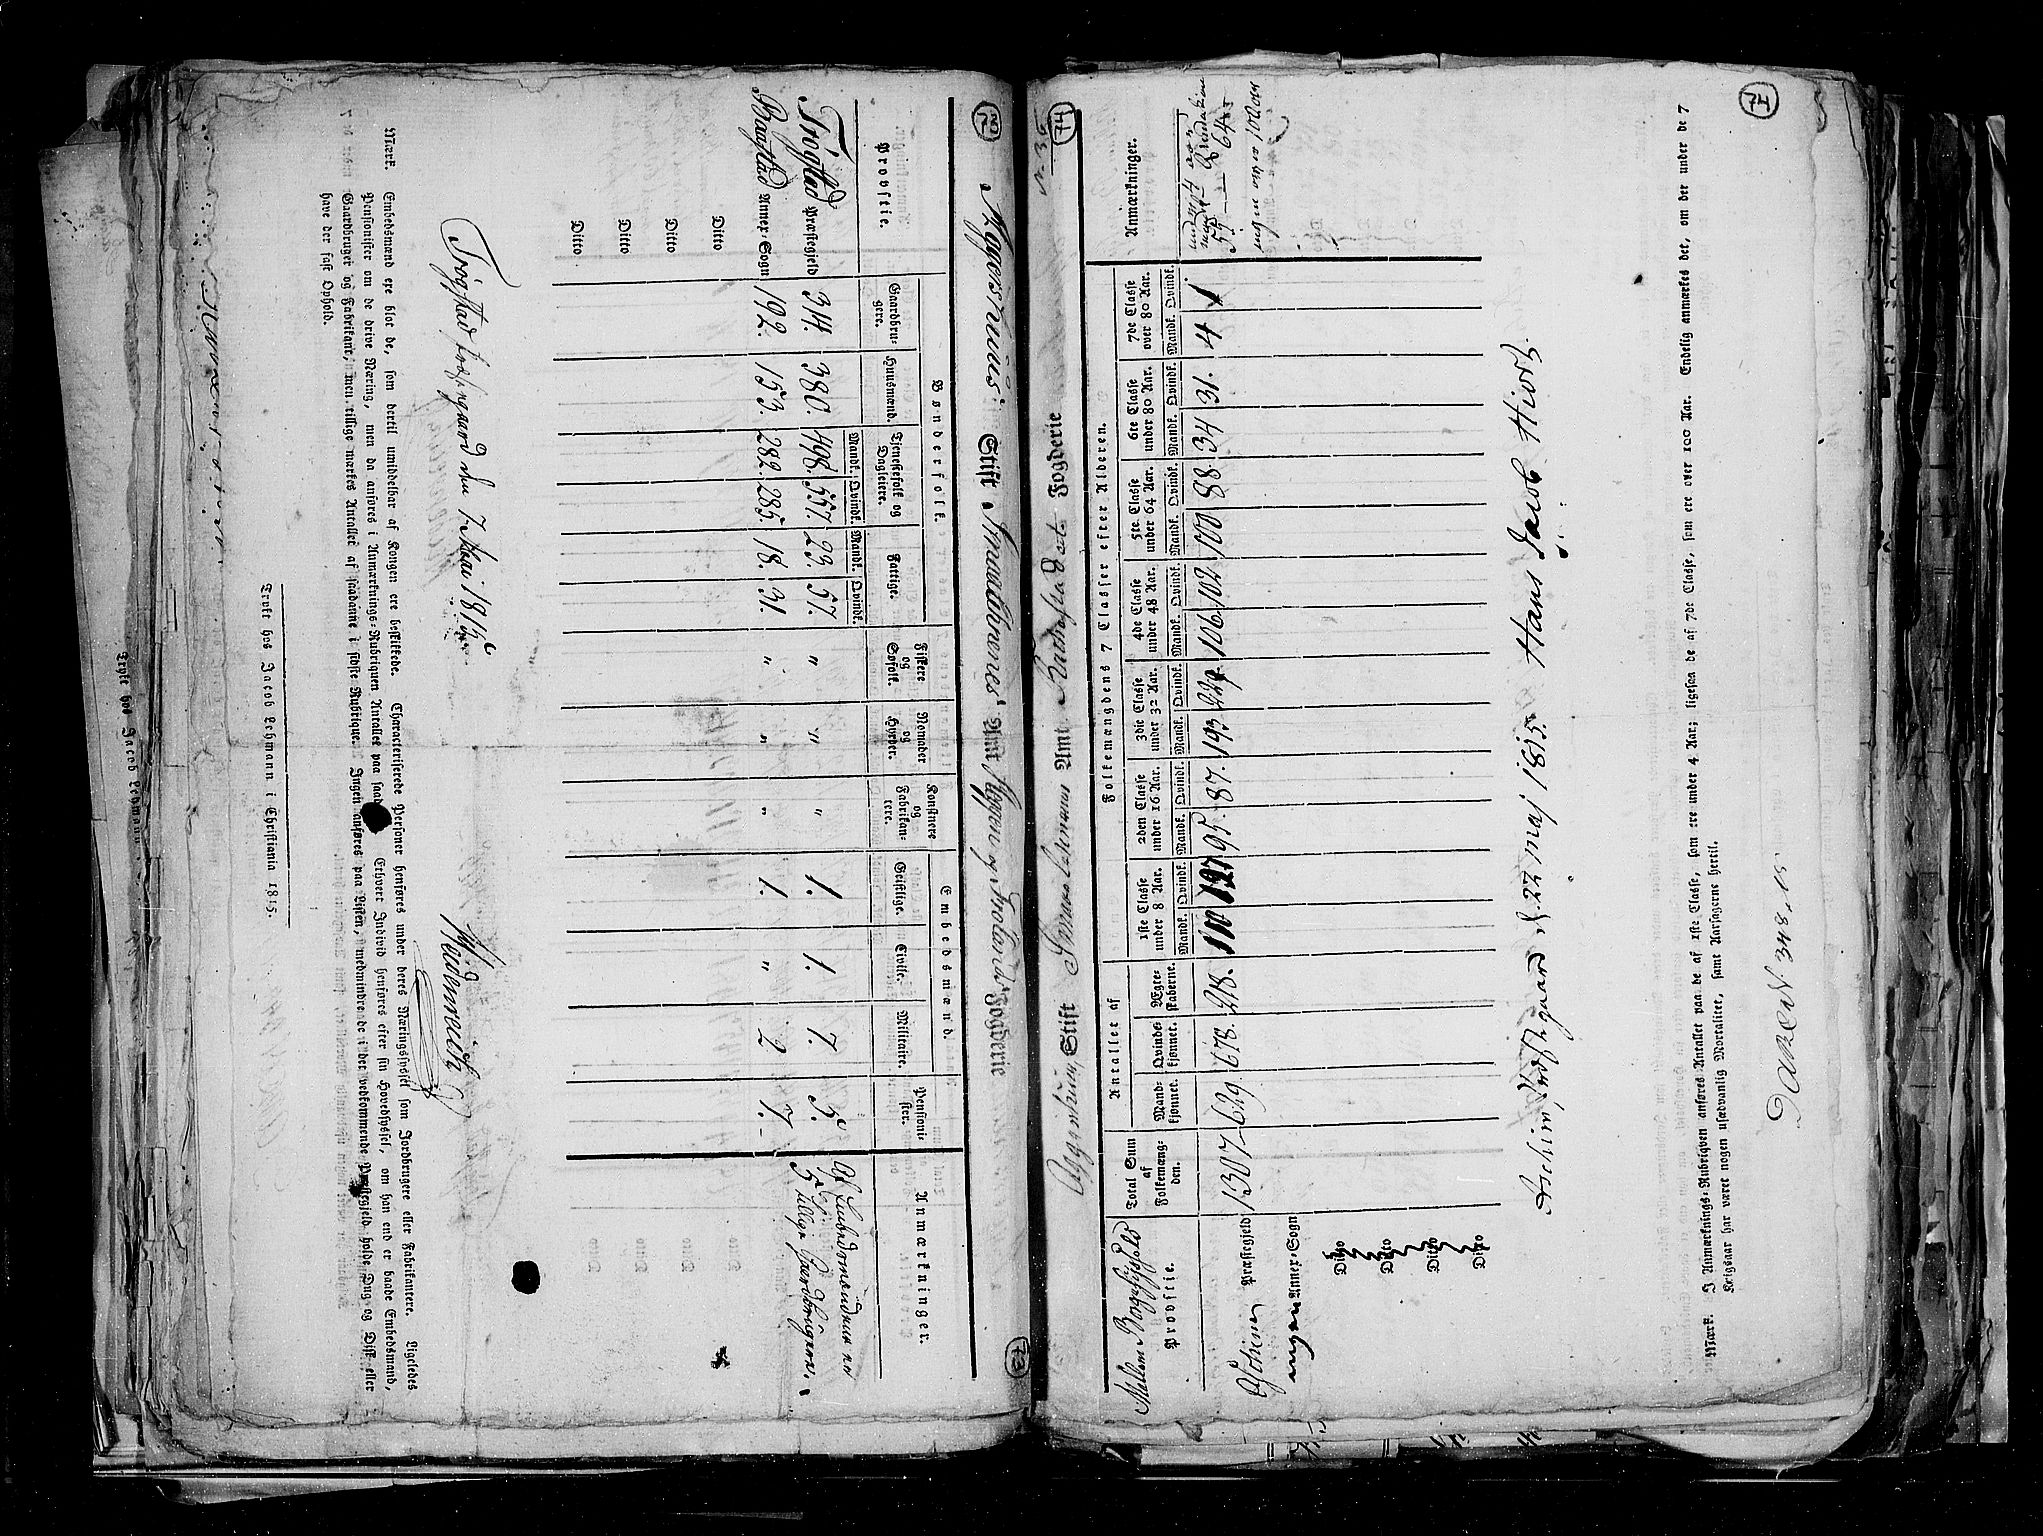 RA, Census 1815, vol. 1: Akershus stift and Kristiansand stift, 1815, p. 50